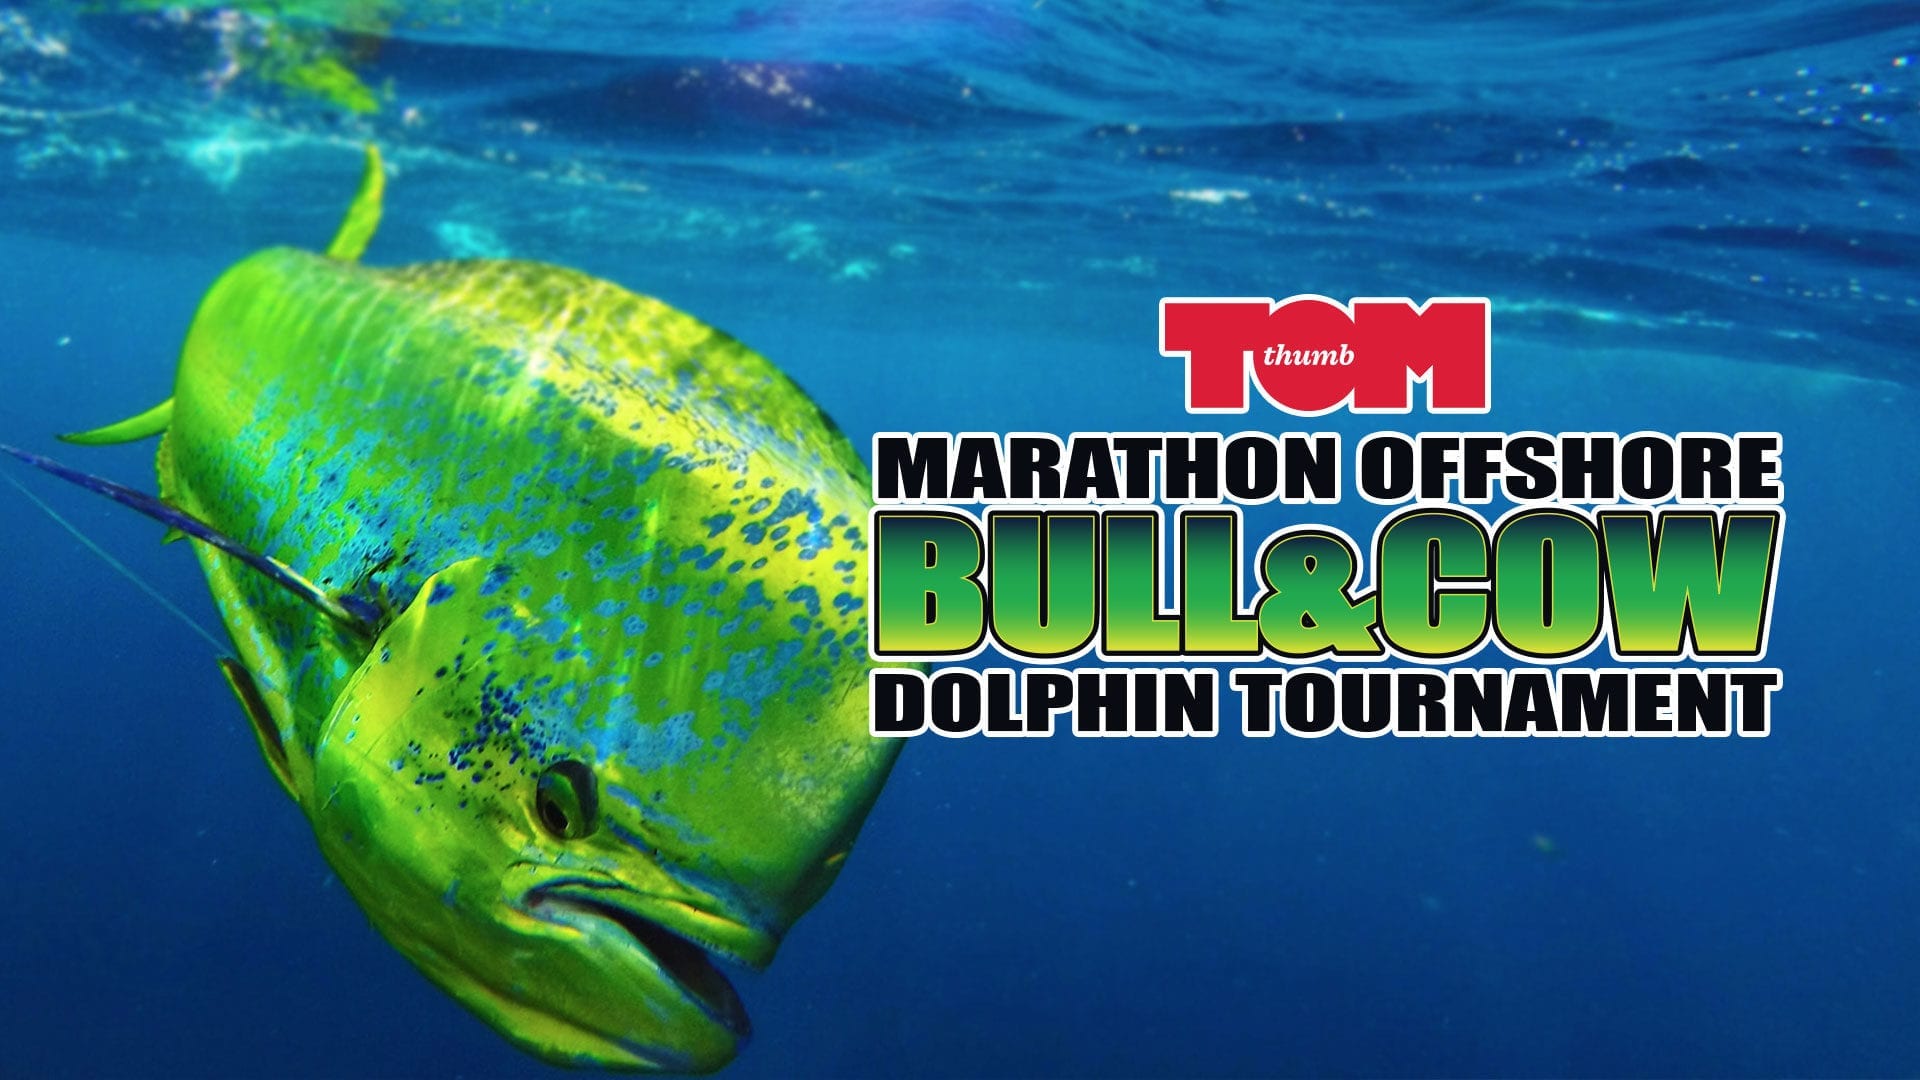 Tom Thumb Marathon Offshore Fishing Tournament in the Florida Keys